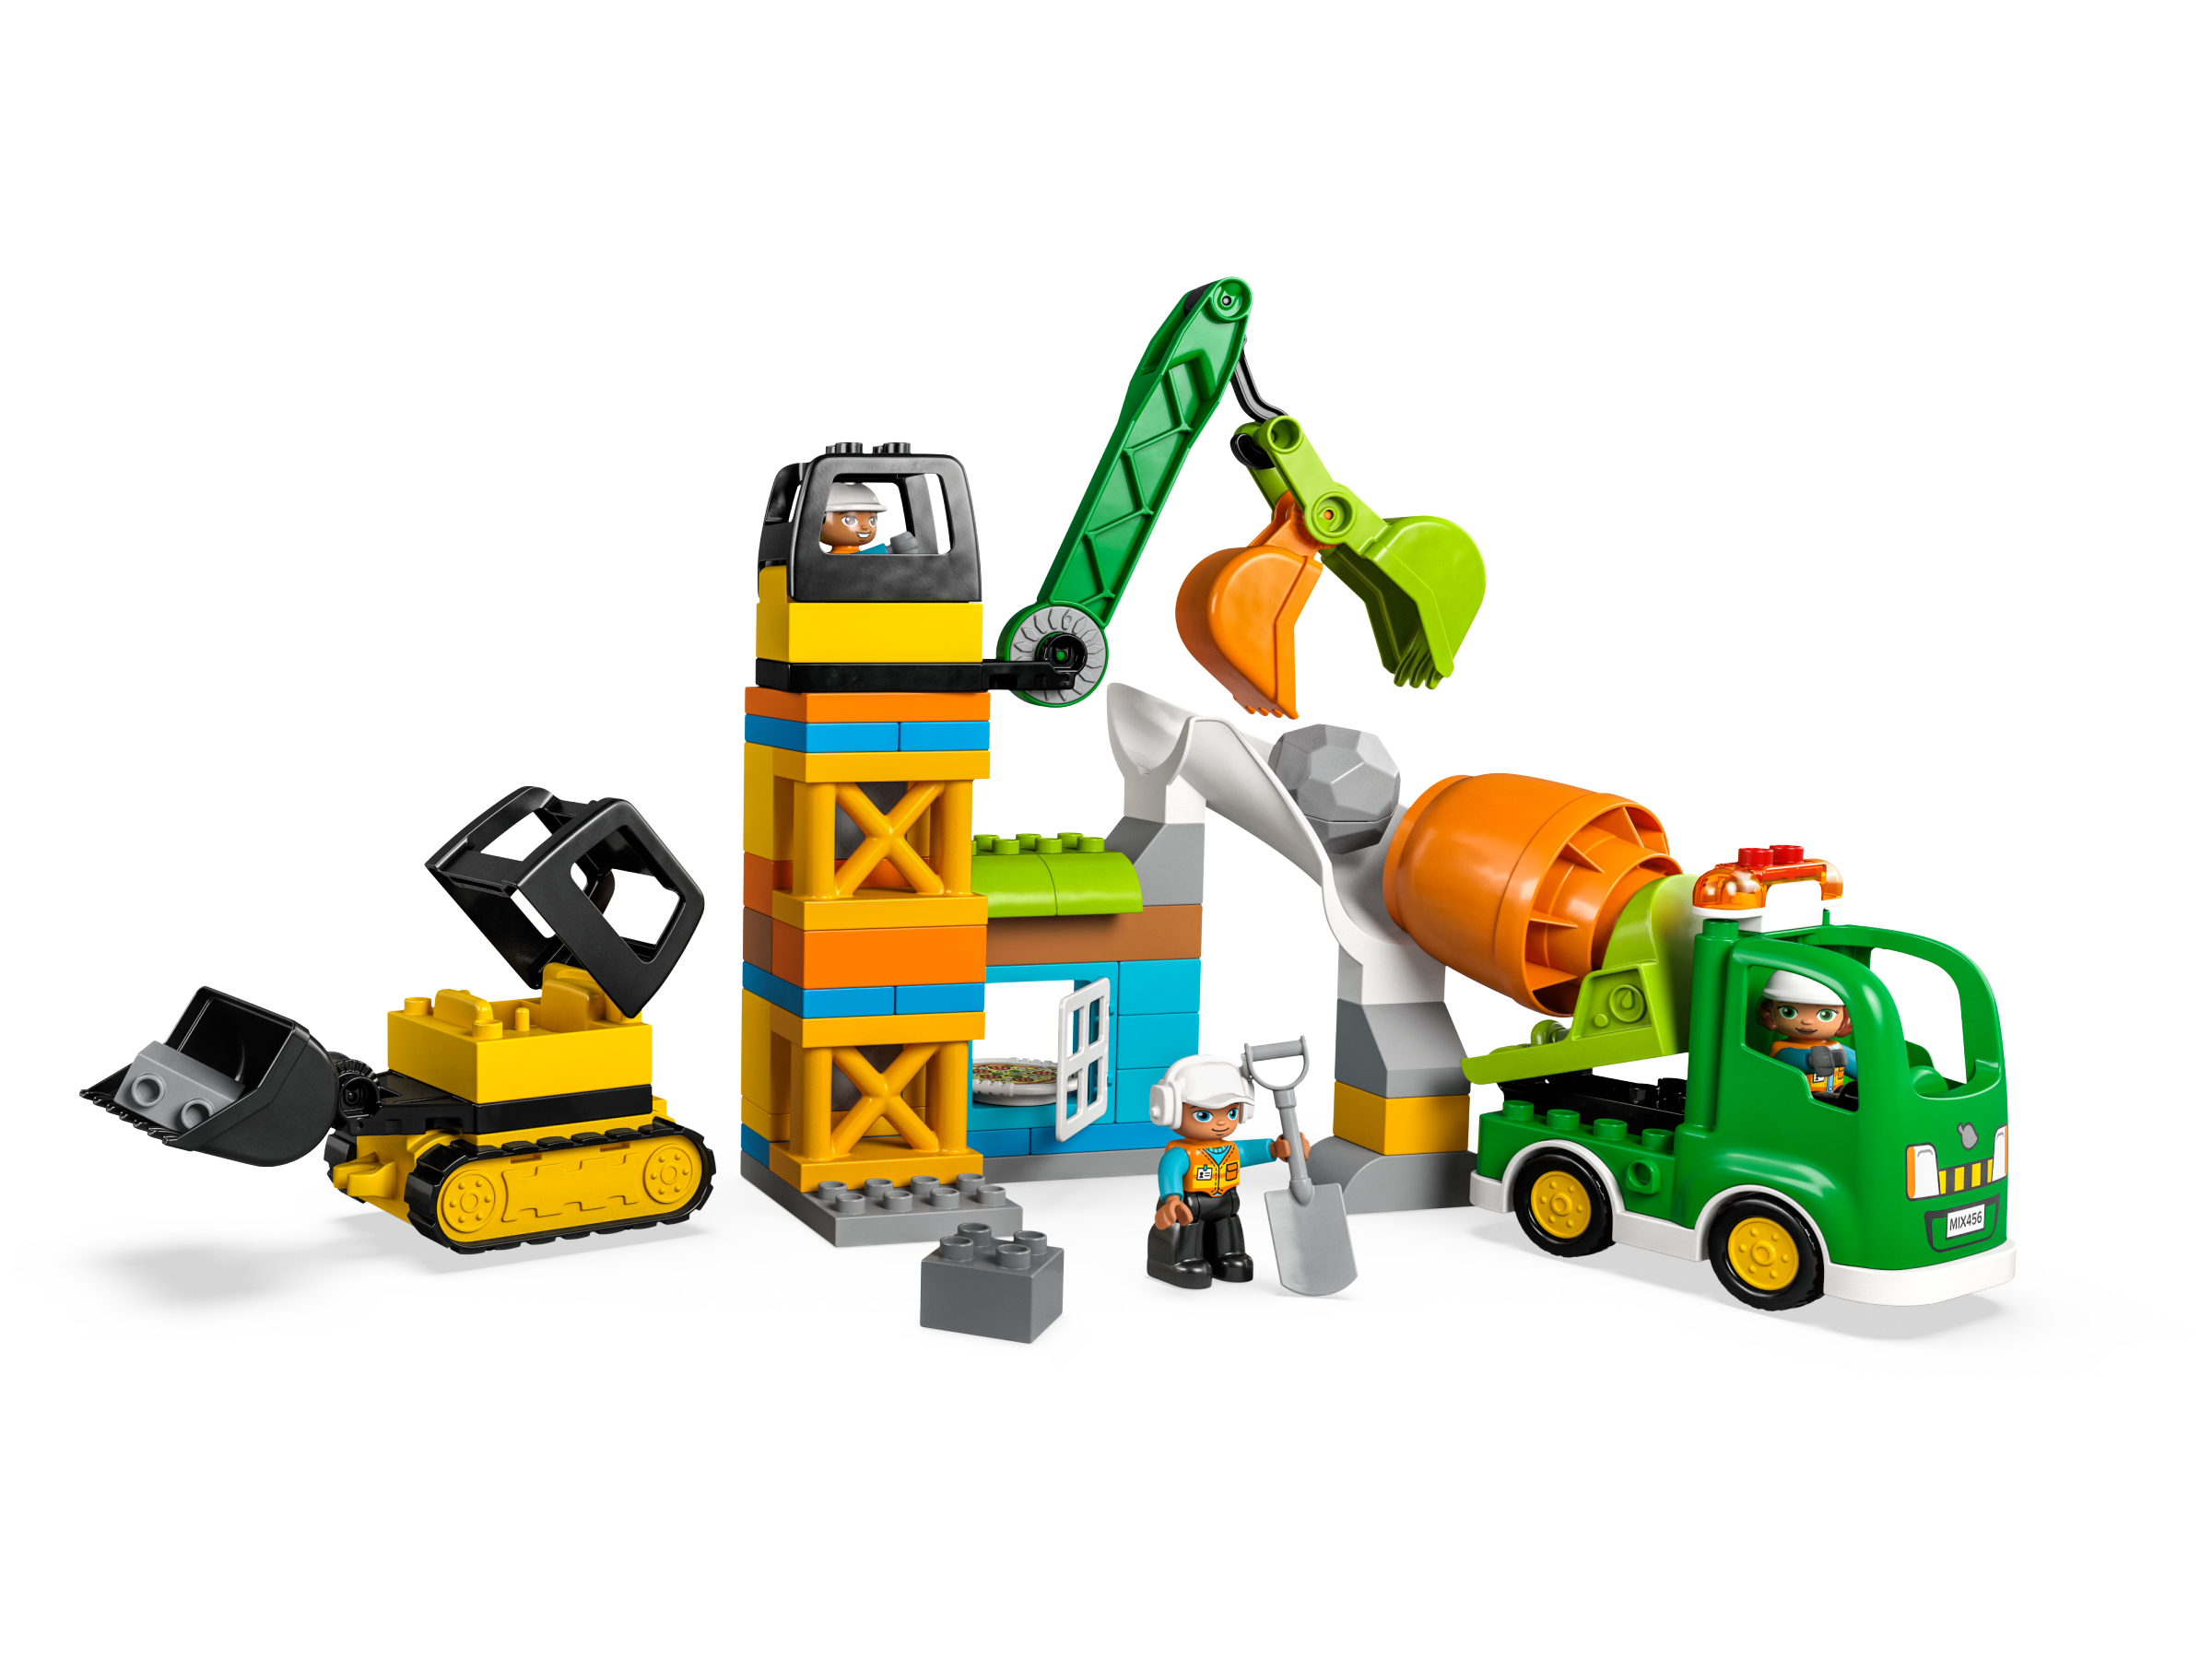 Lego 10990 Construction Site